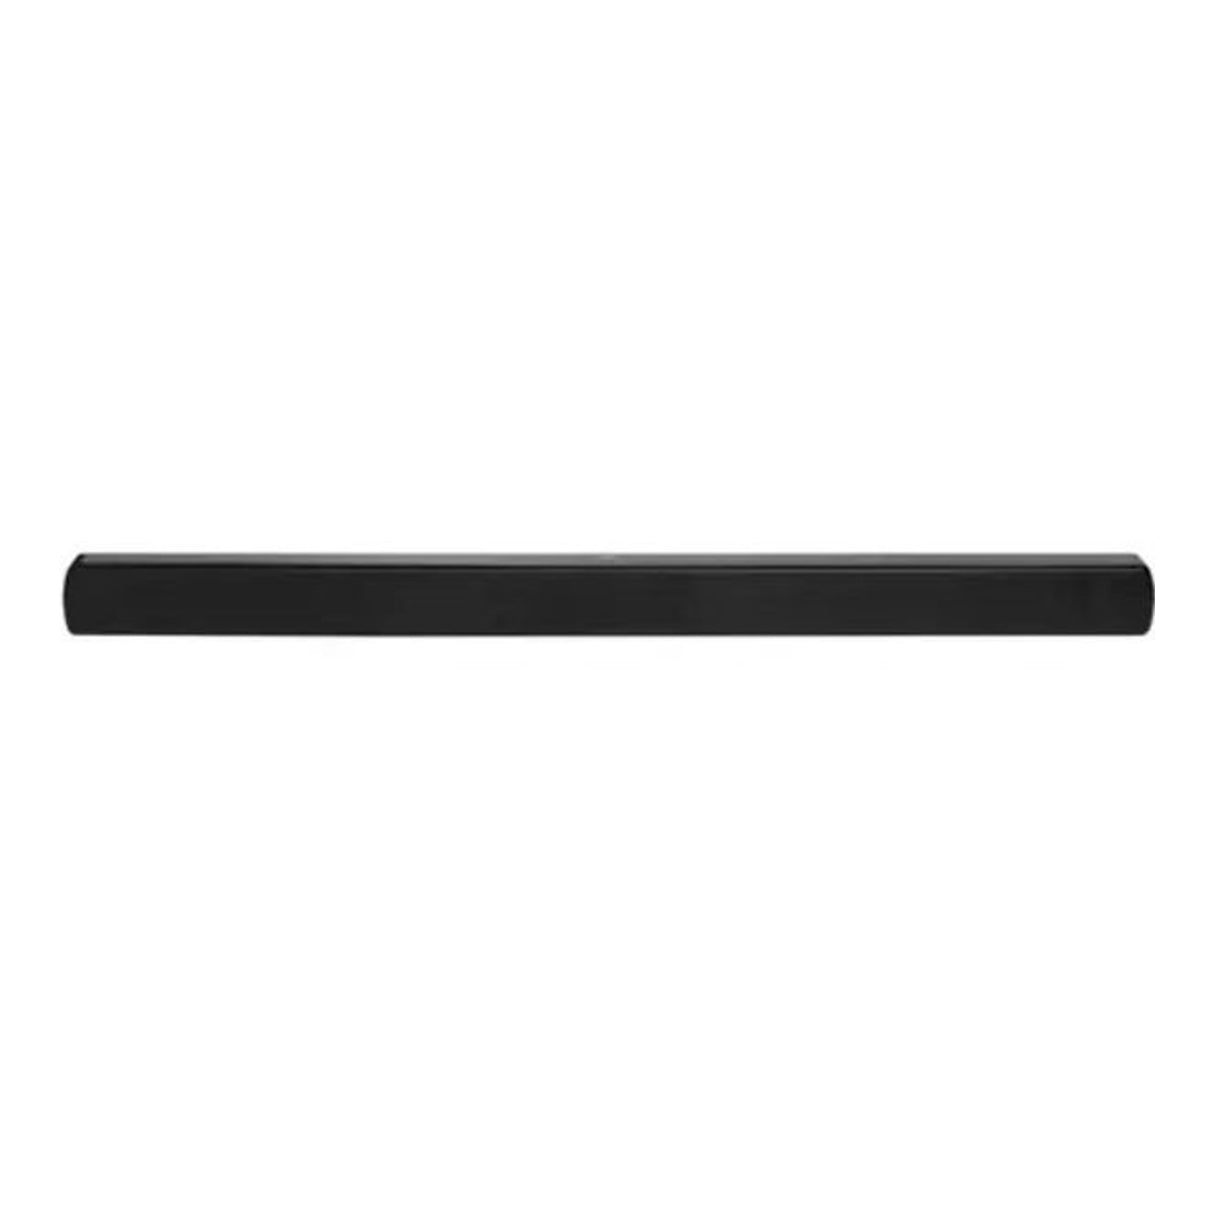 JBL SB170 - 2.1 Channel Sound Bar With Wireless Subwoofer (Black)